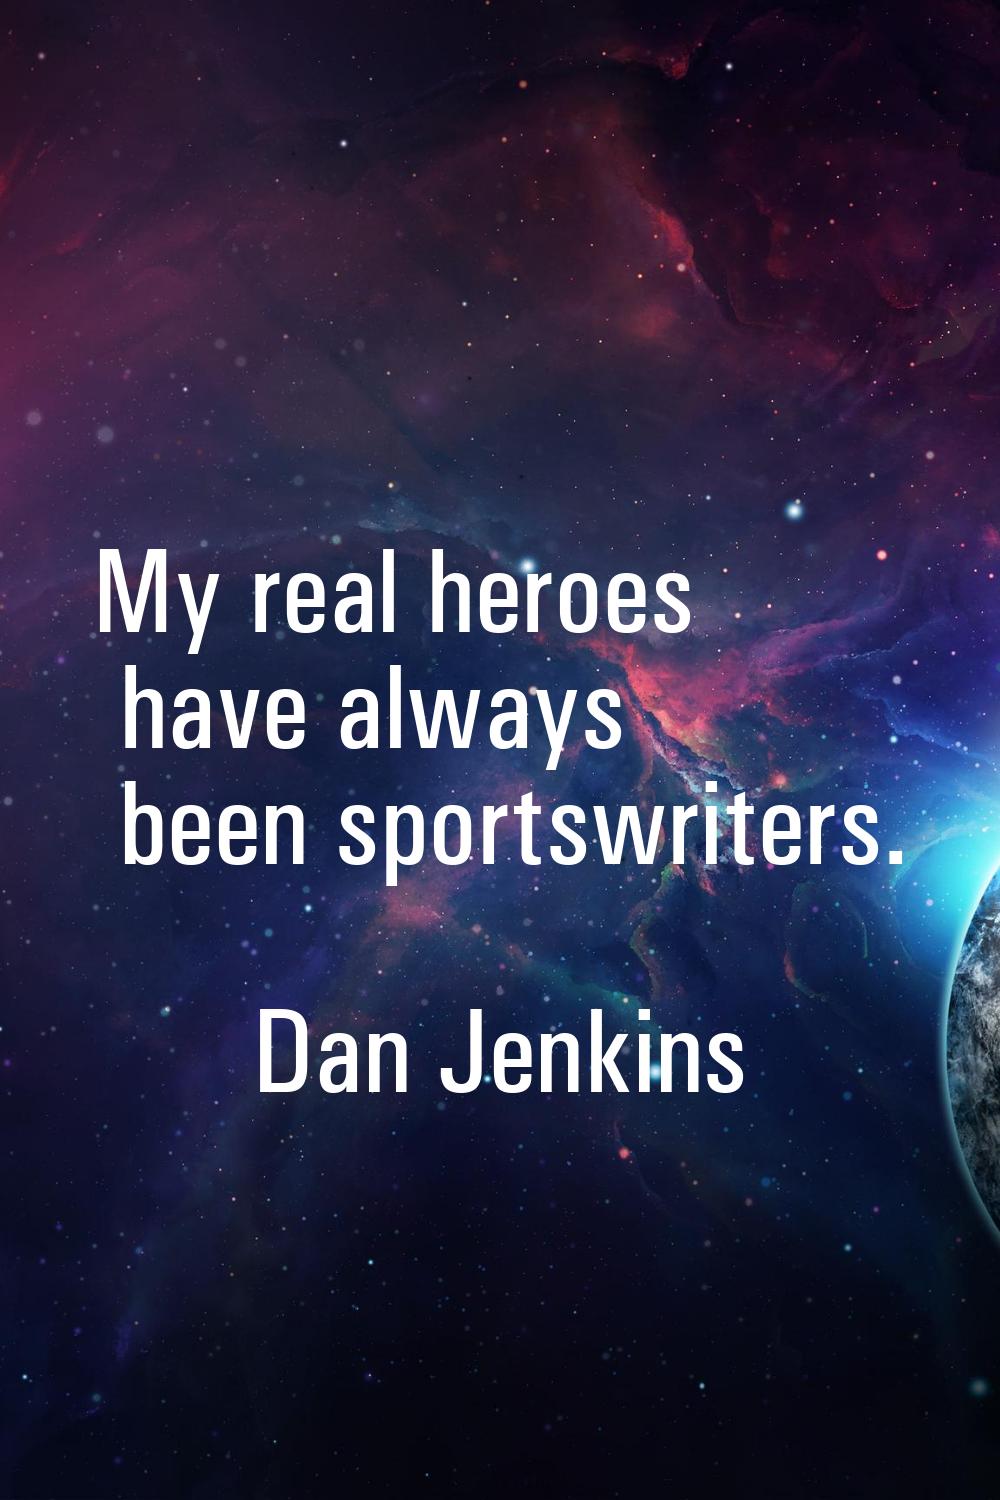 My real heroes have always been sportswriters.